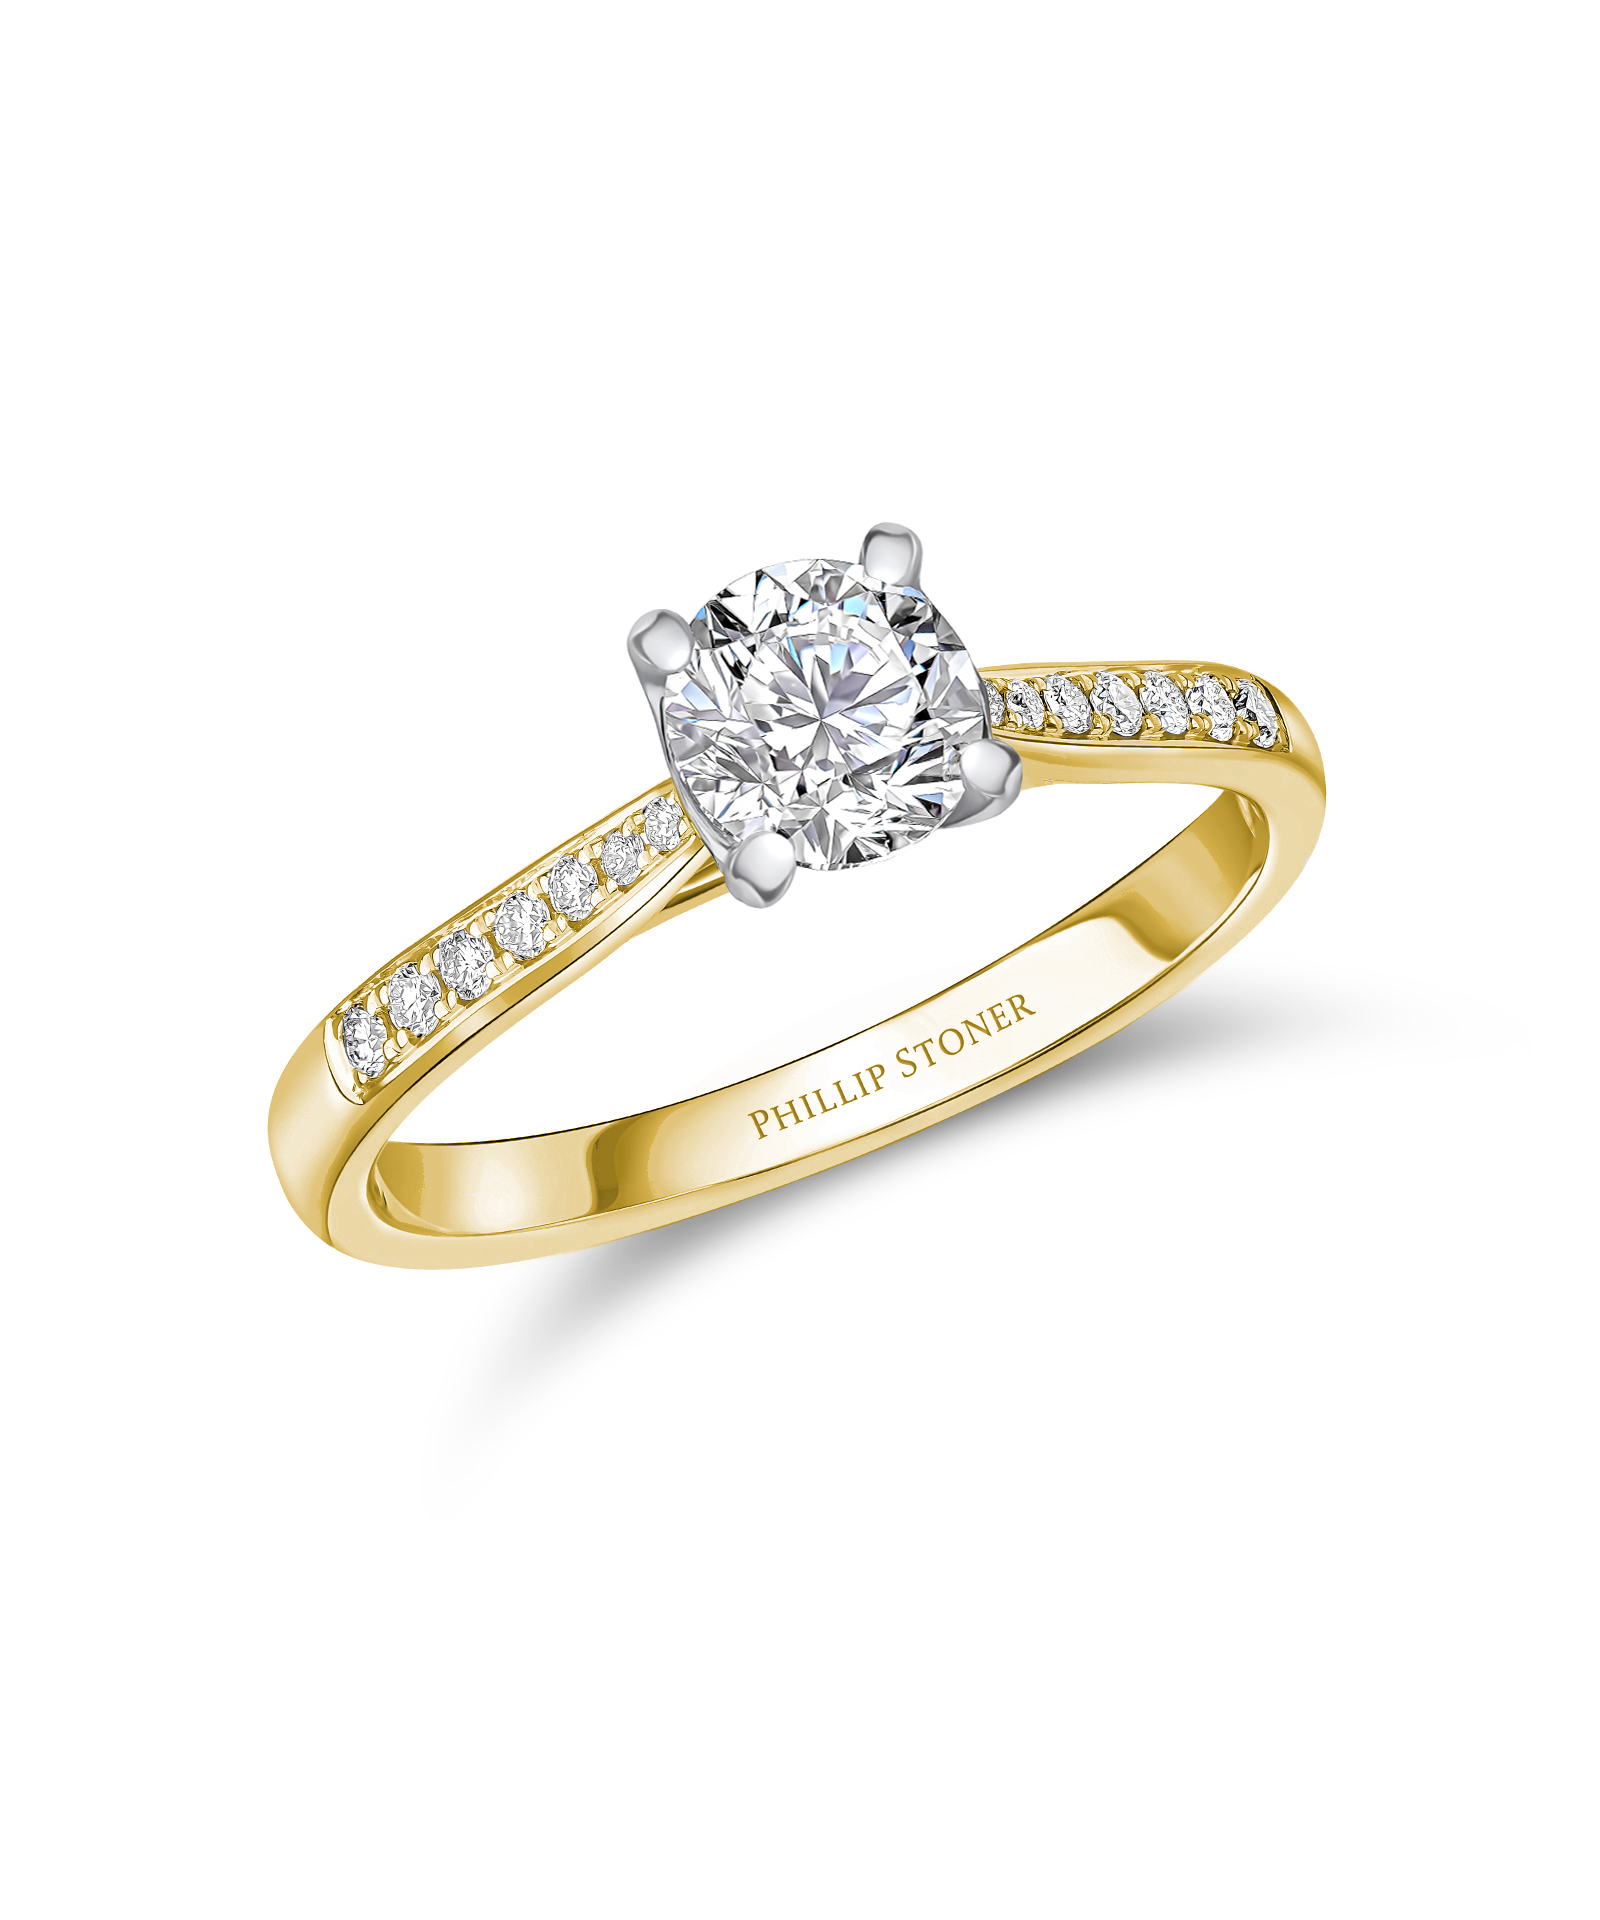 18ct Yellow Gold Pavé Set Diamond Engagement Ring